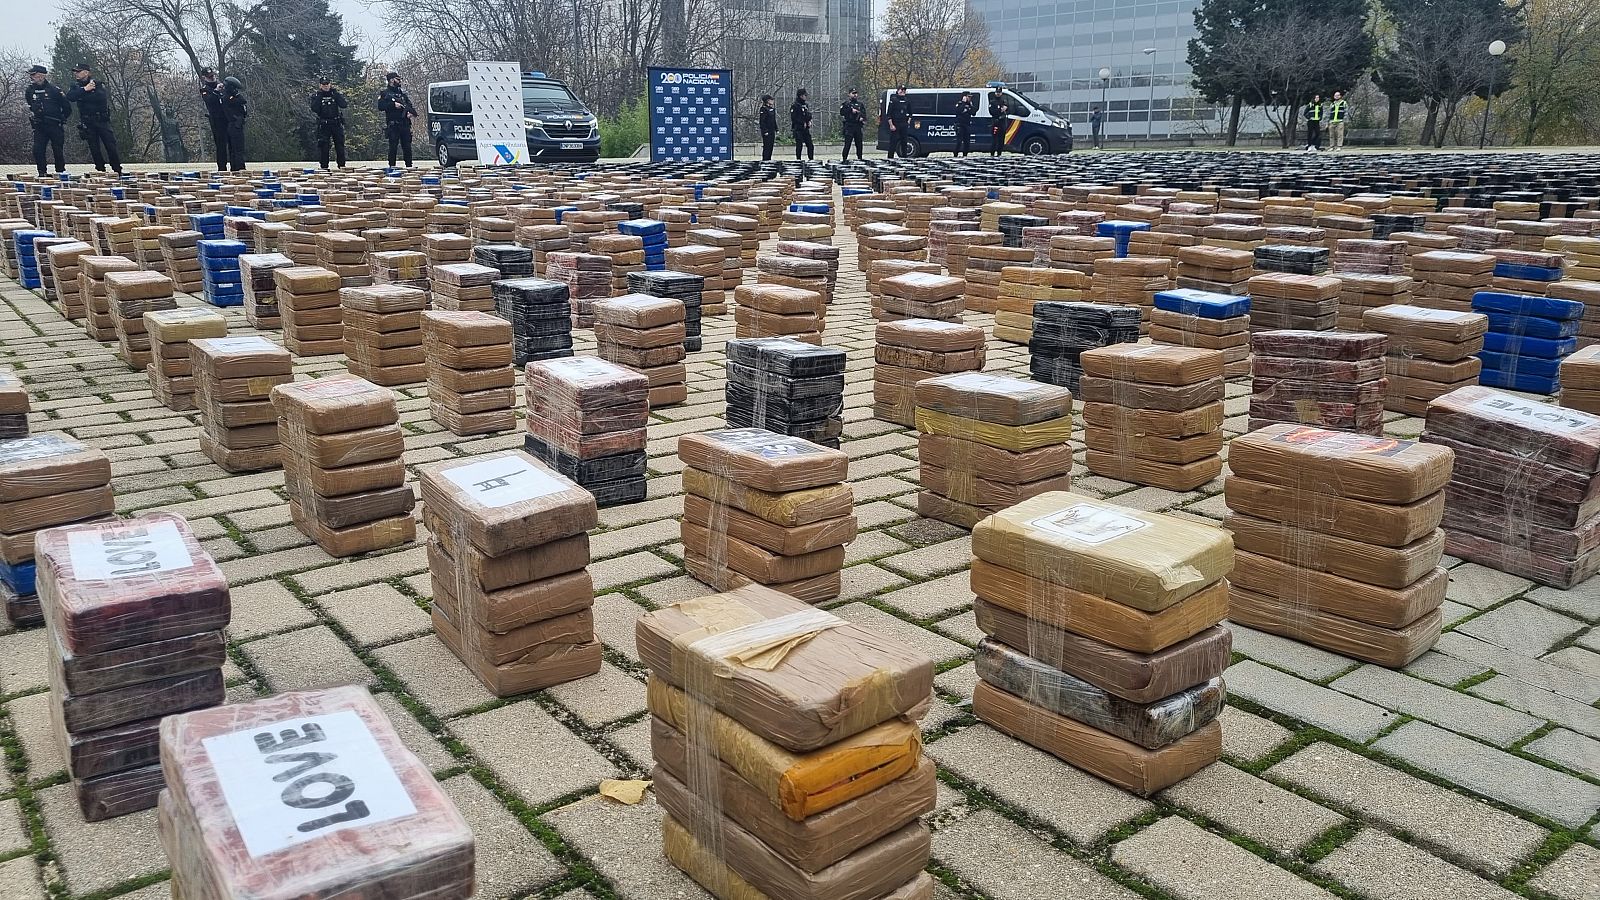 Incautadas 11 toneladas de cocaína por la Policía Nacional